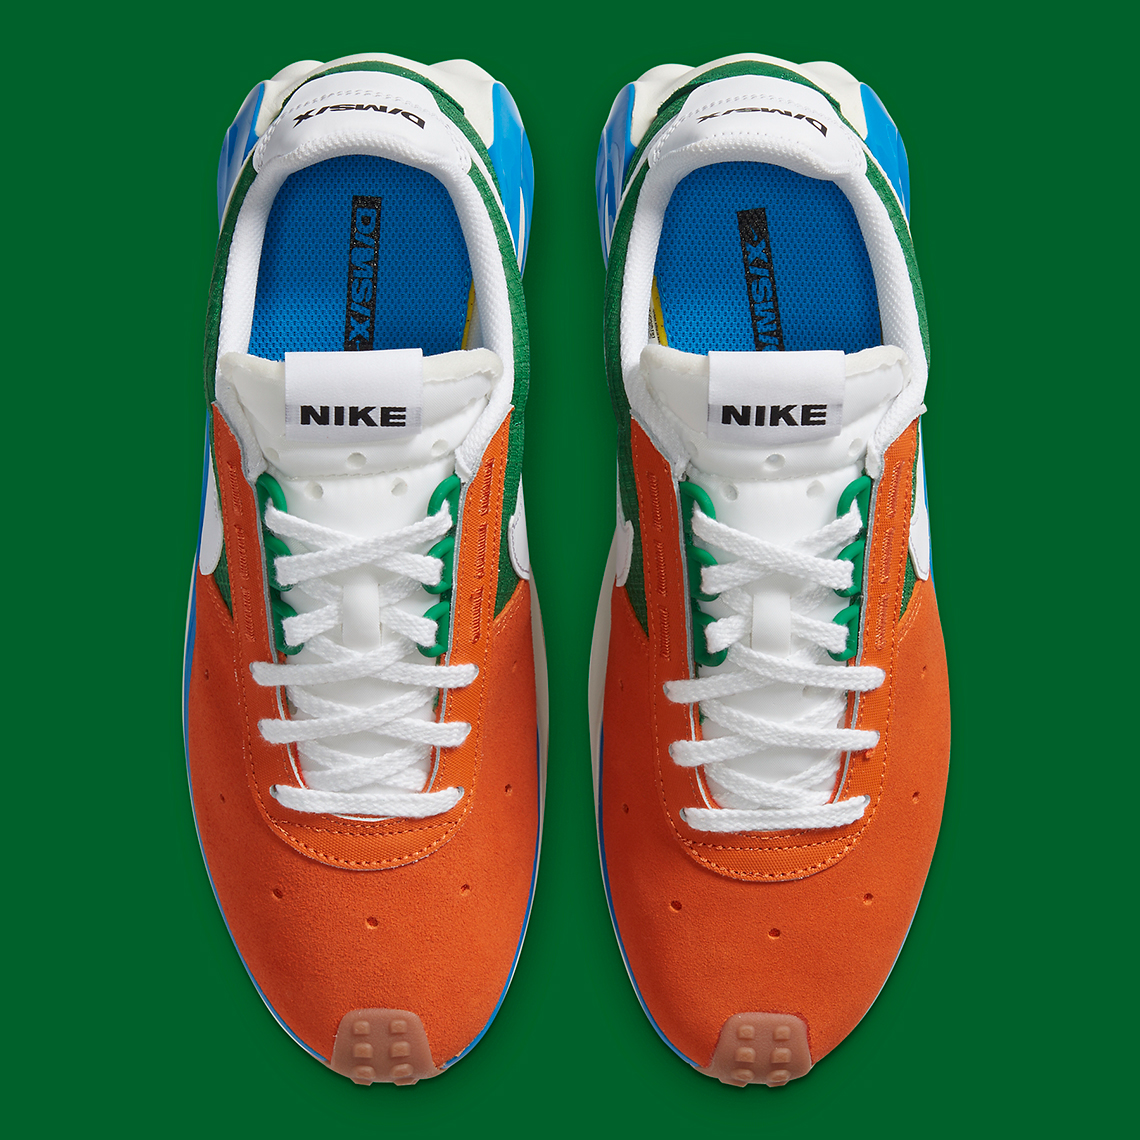 Nike D Ms X Sting Starfish Pine Green Cq05 800 Sneakernews Com